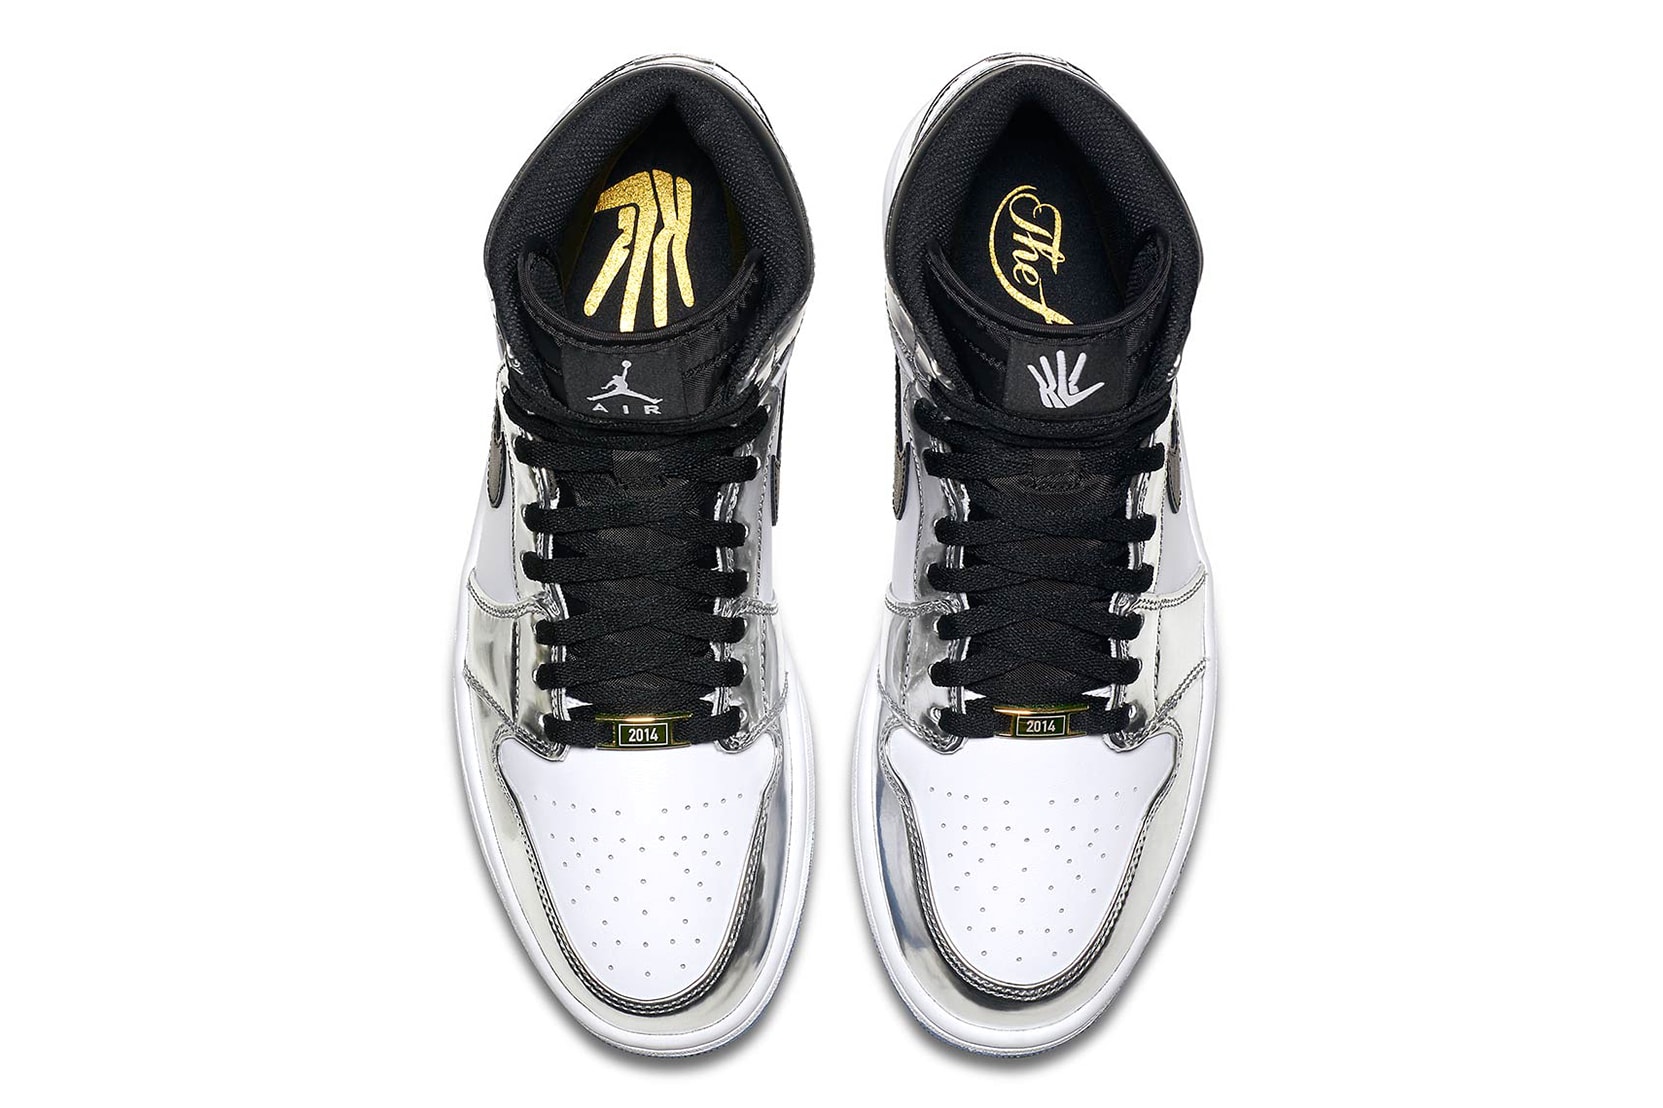 Nike Air Jordan 1 Retro High x Kawhi Leonard Sneakers Kicks Trainers Shoes Closer Look Silver Black White Blue Colorway Basketball 2014 MVP